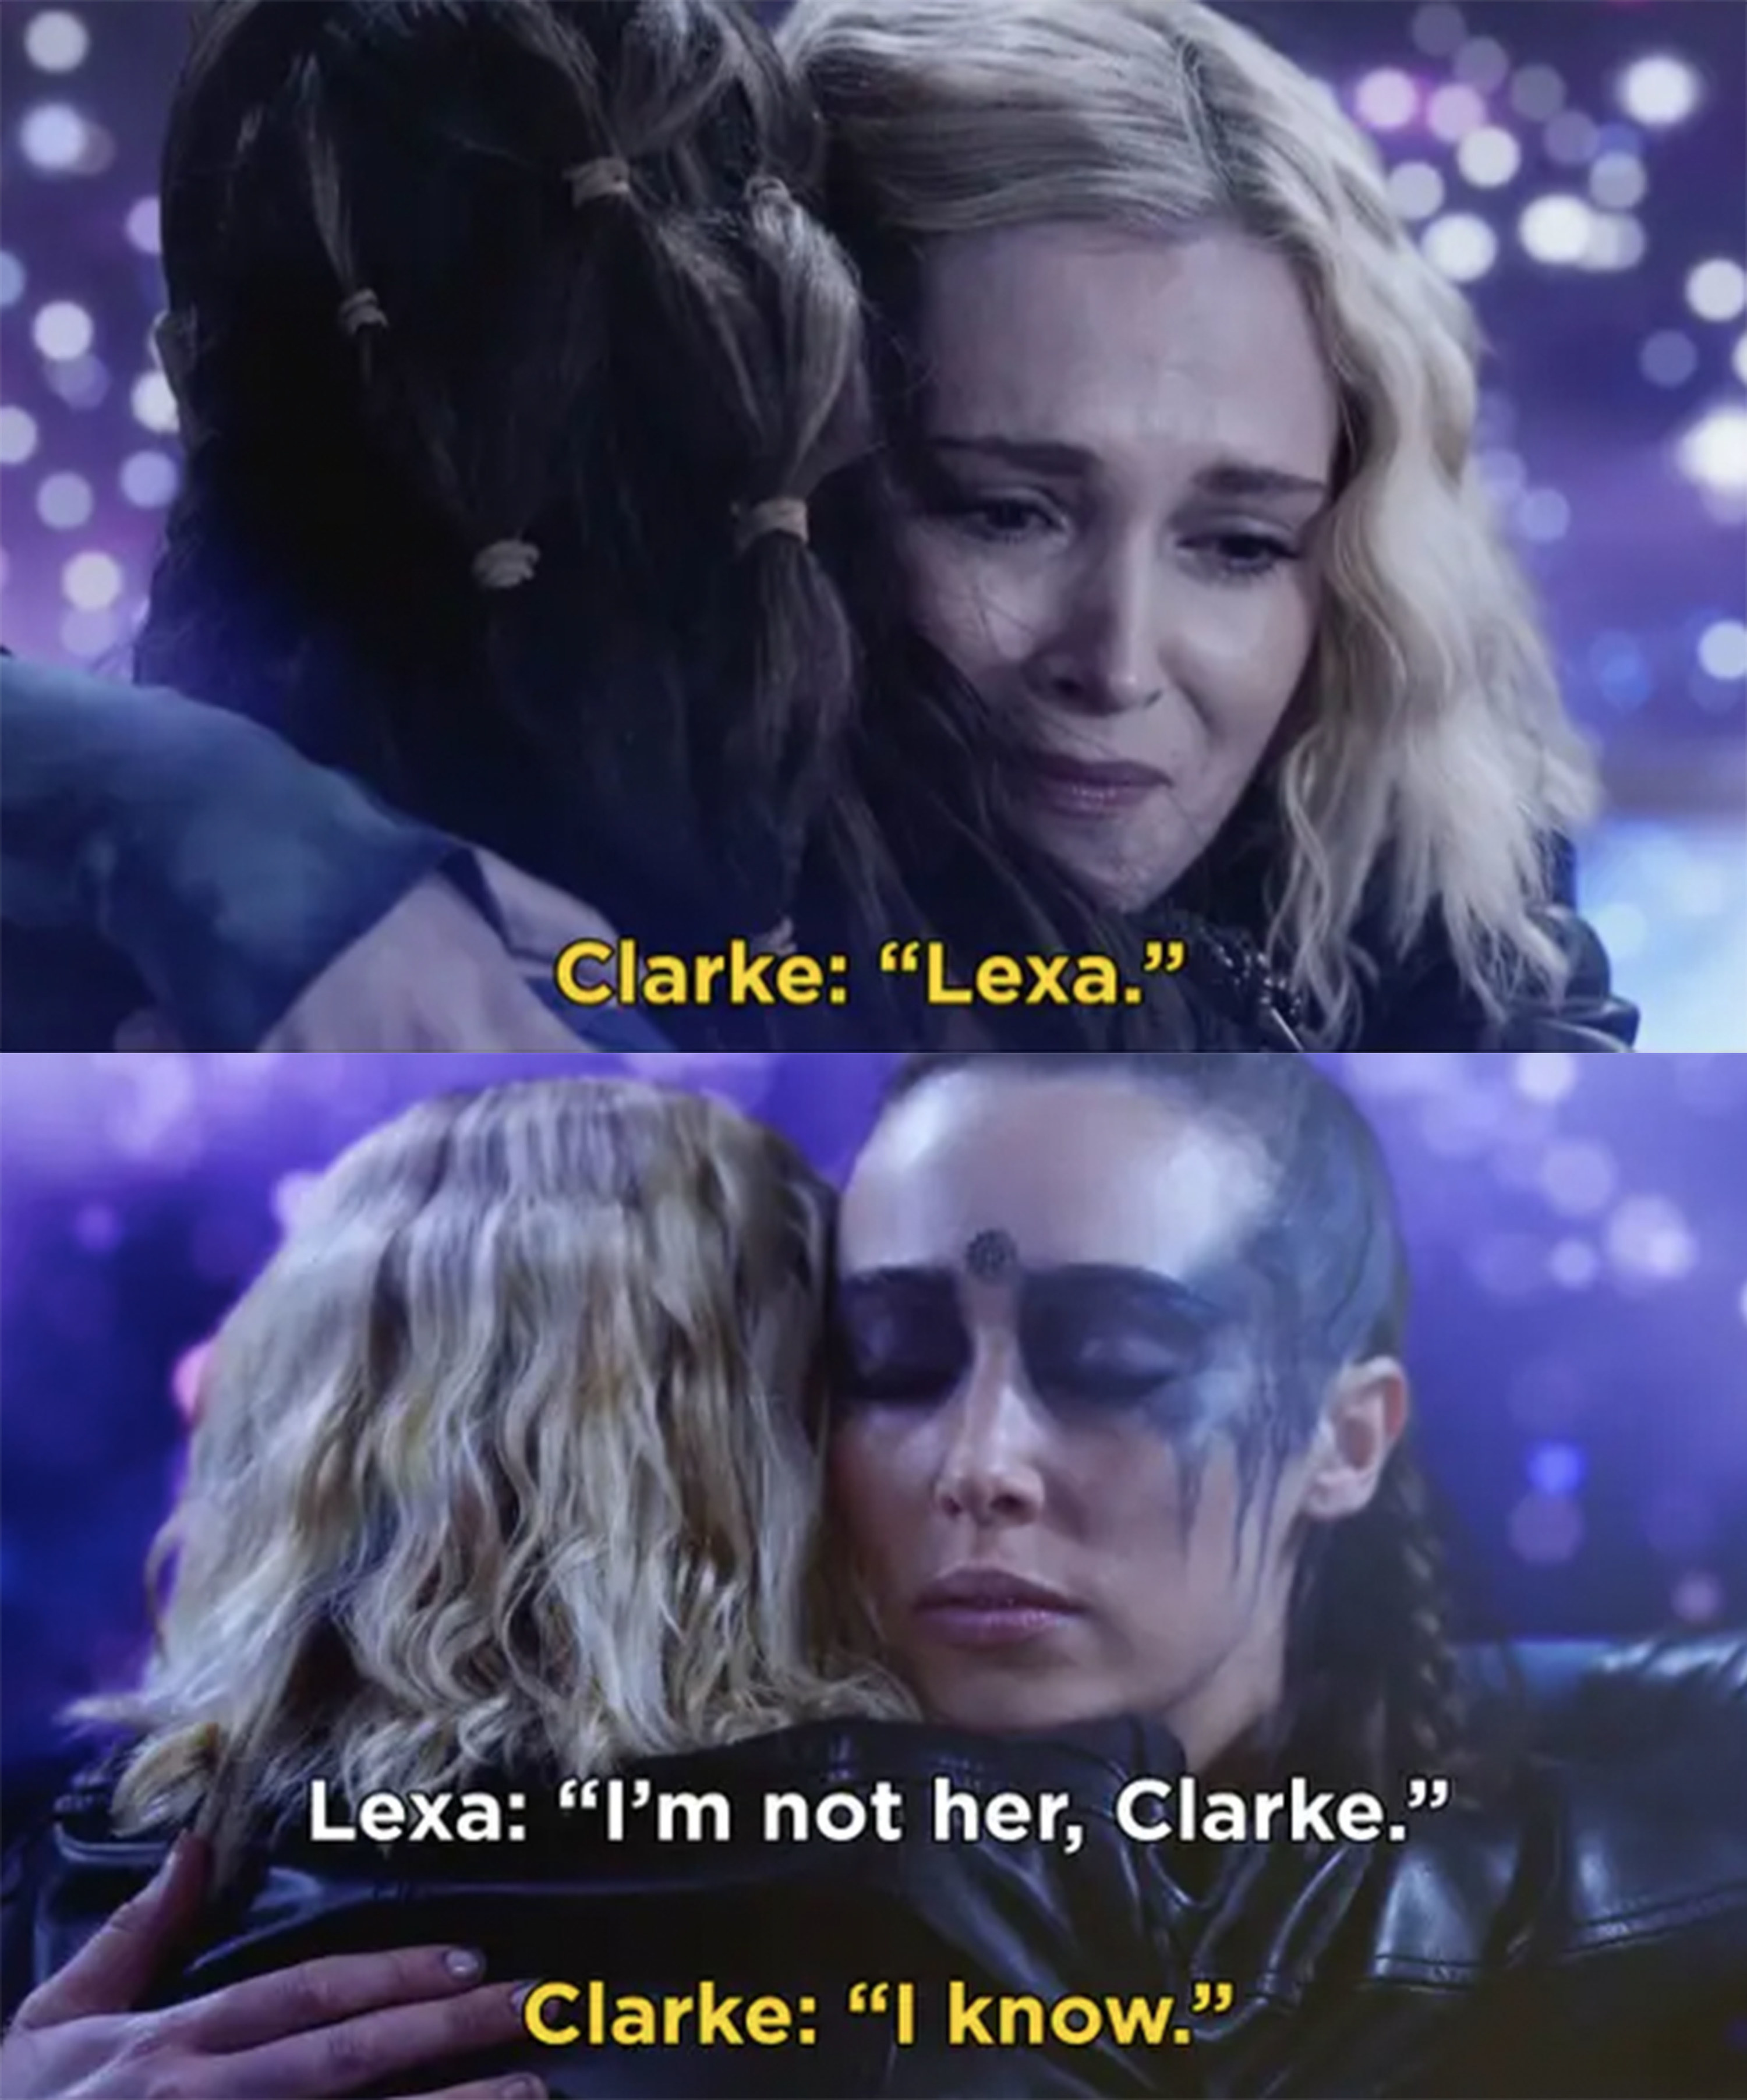 Clarke hugs the manifestation of Lexa, who reminds her that she&#x27;s not really Lexa